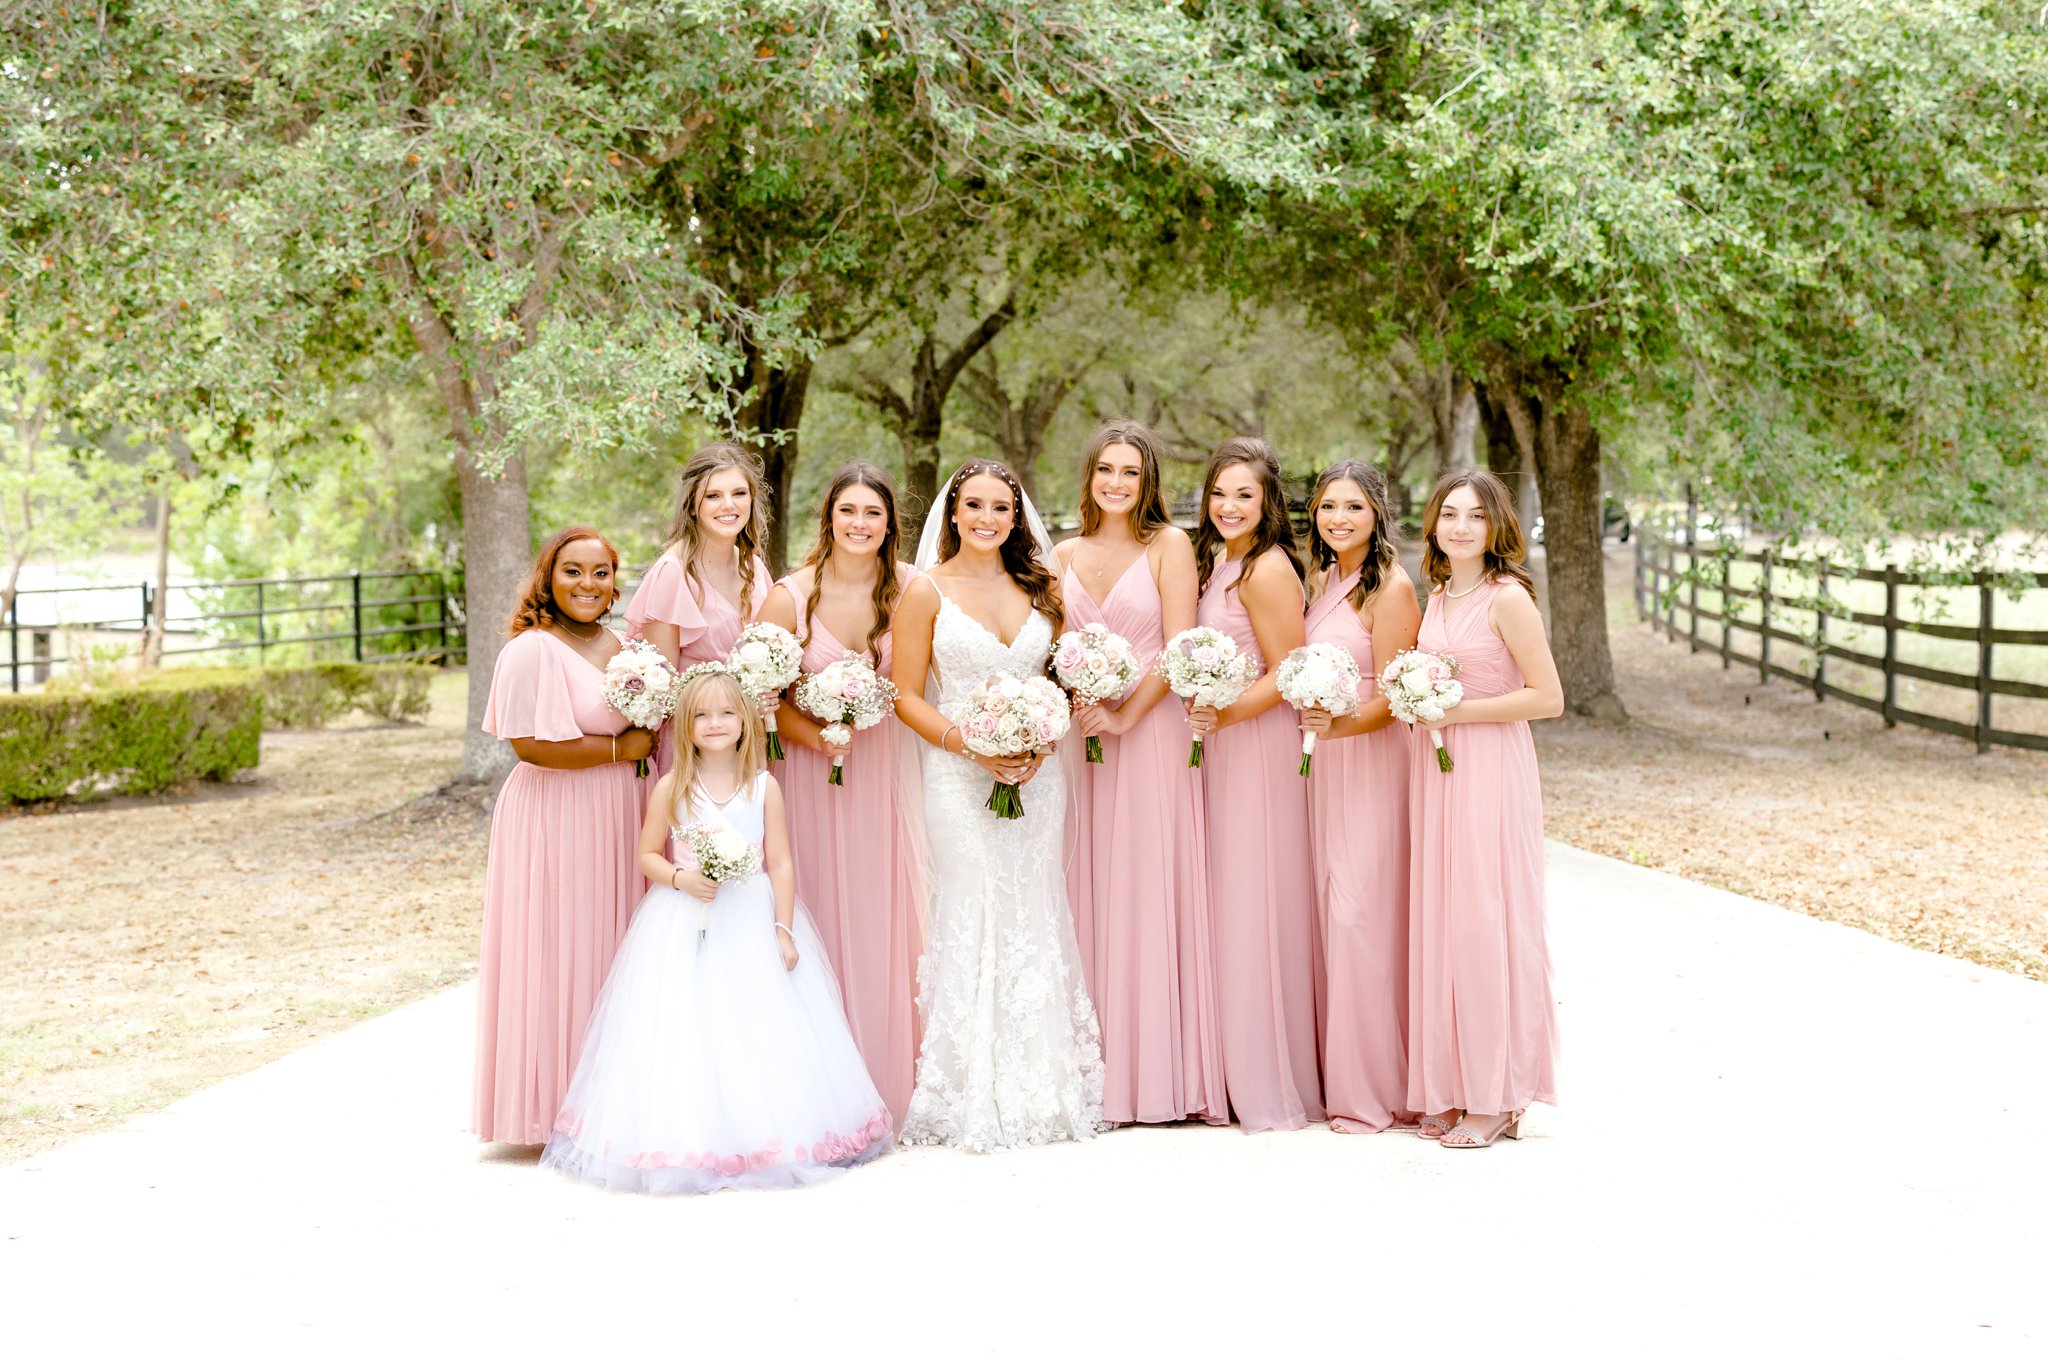 texas wedding photographer / Kasey Lynn Photography